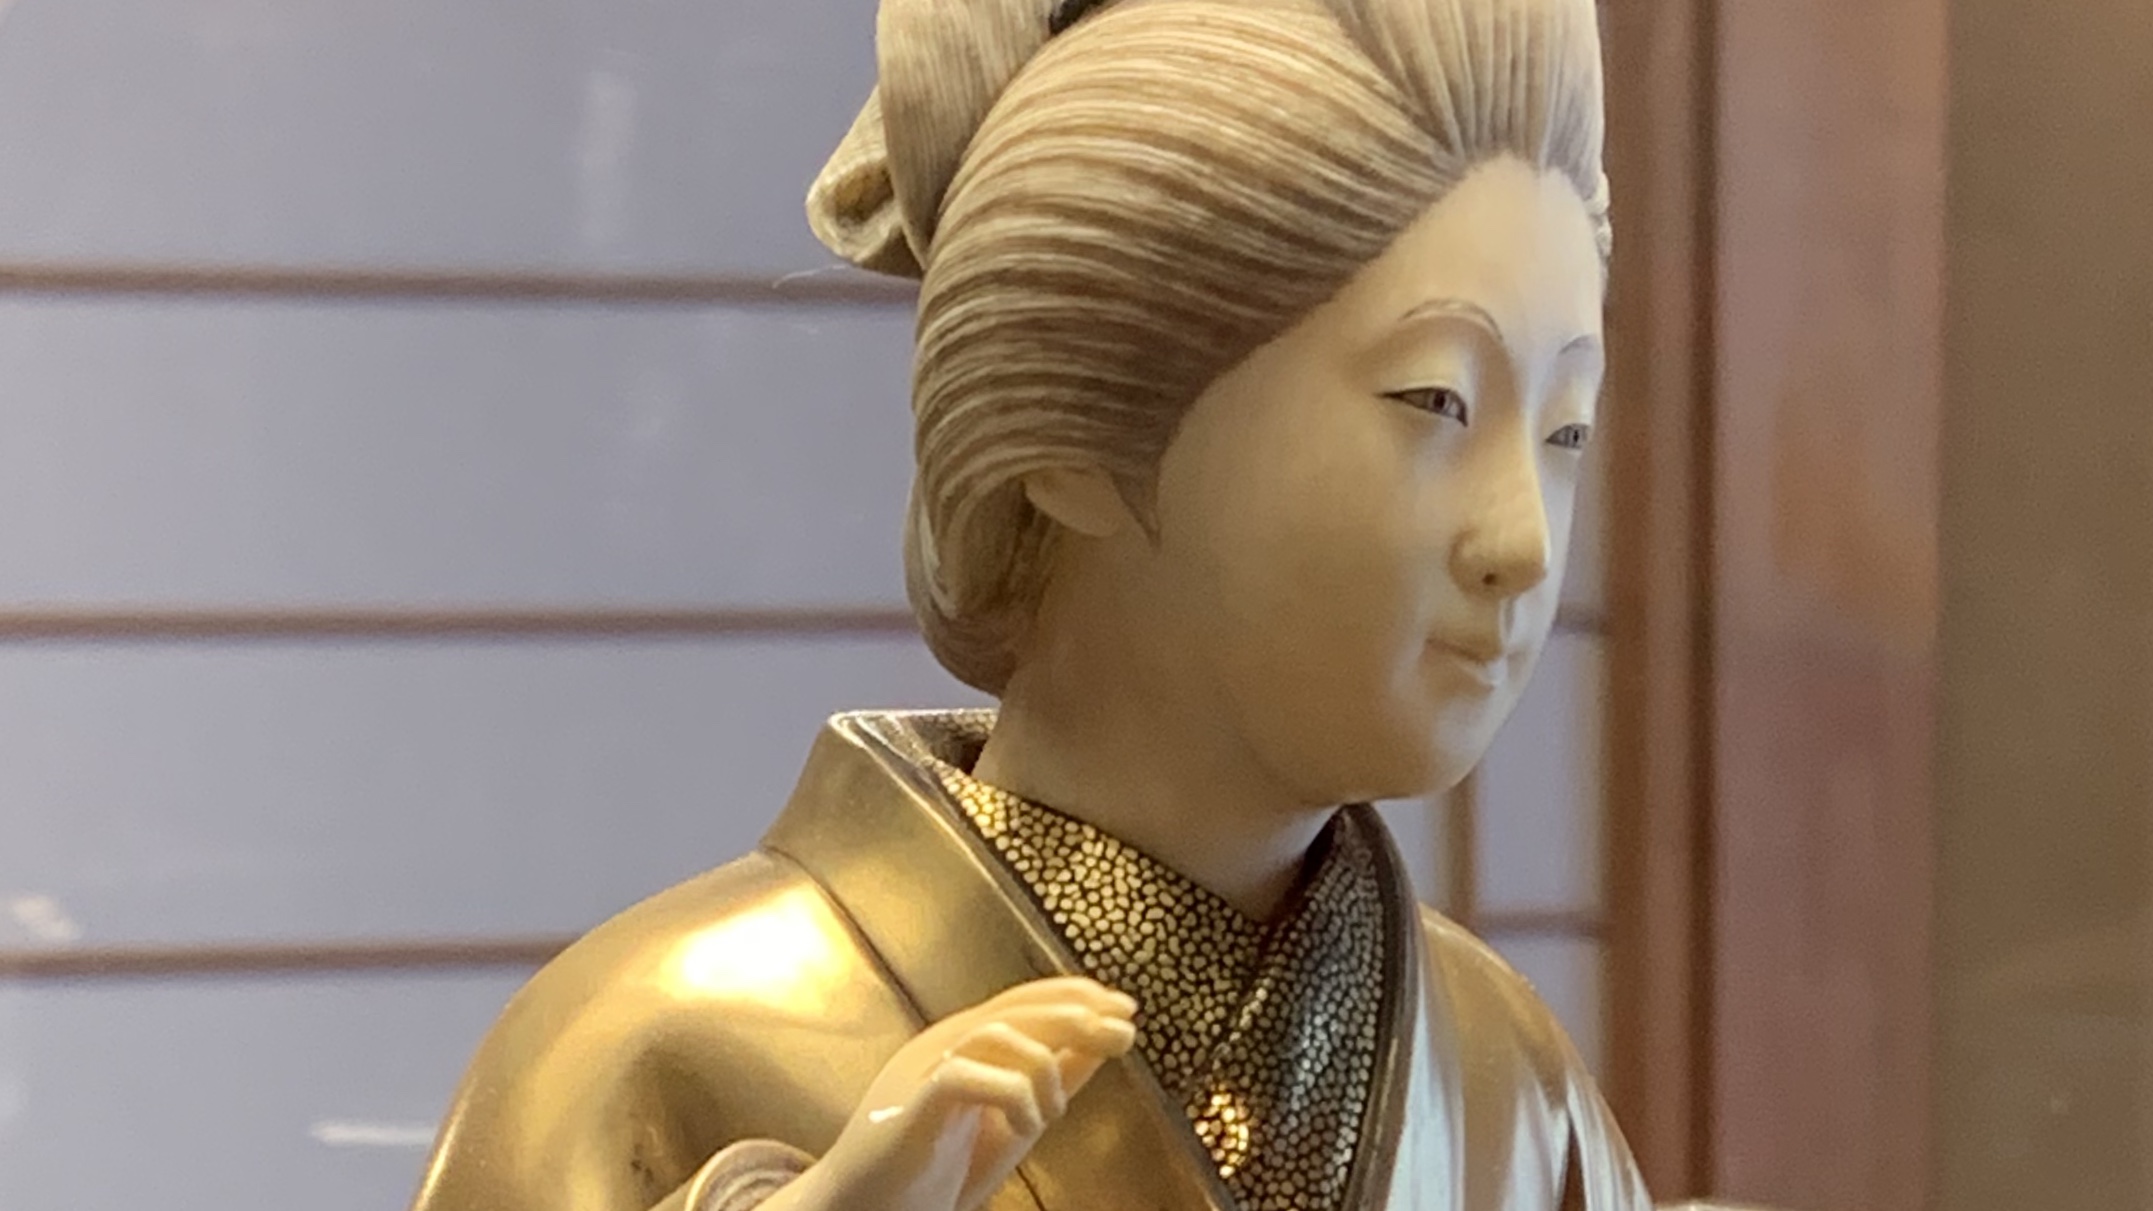 gold and ivory geisha doll in the western geisha district in Kanazawa